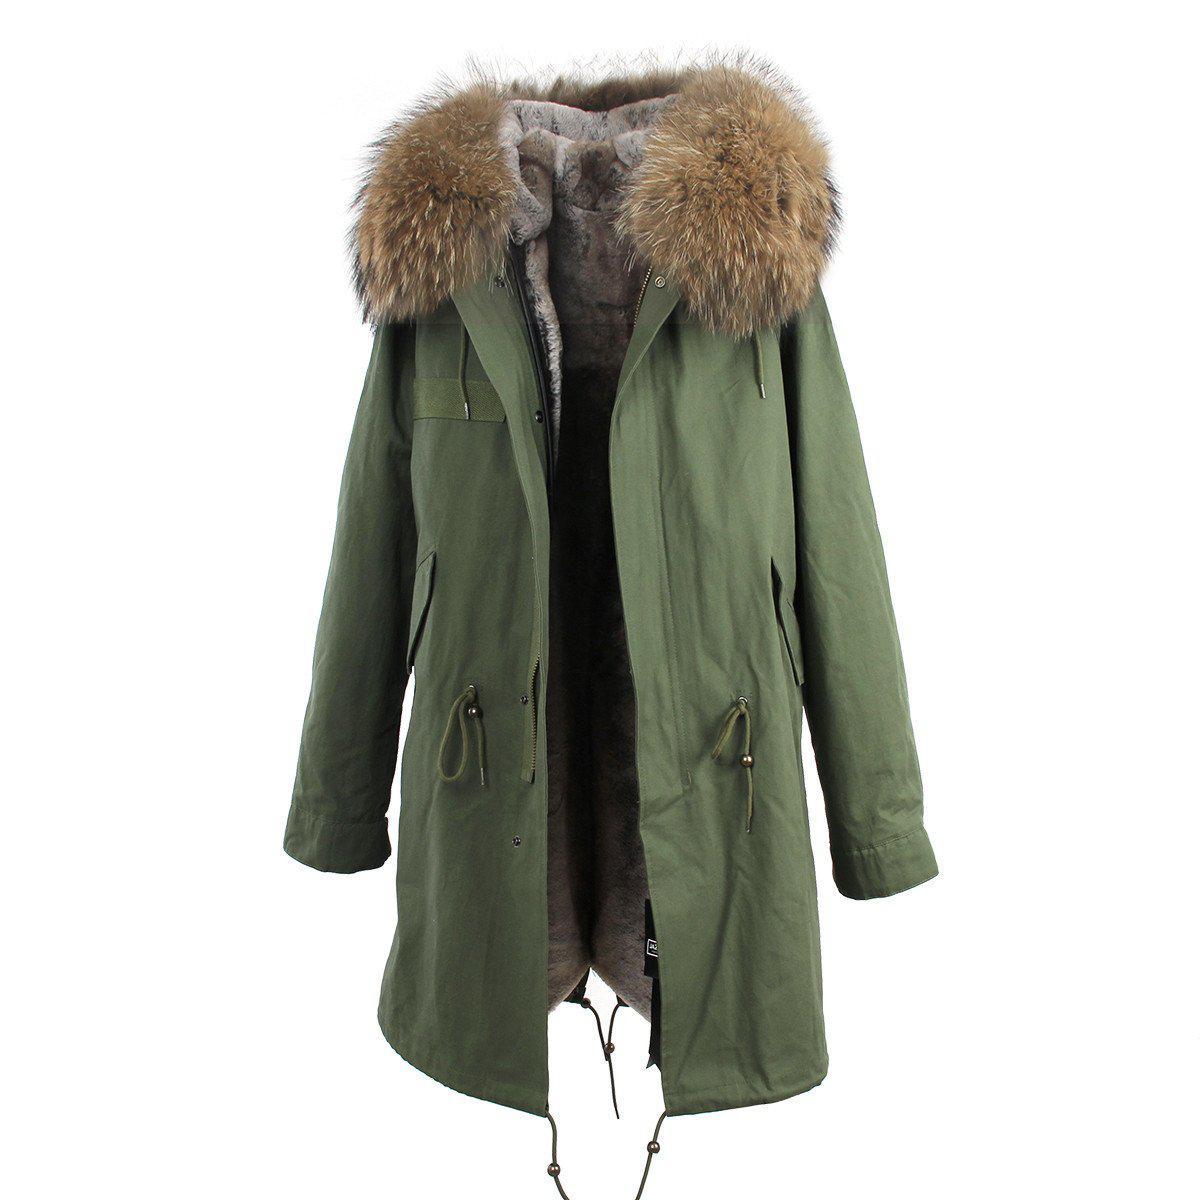 Raccoon fur hooded winter jacket